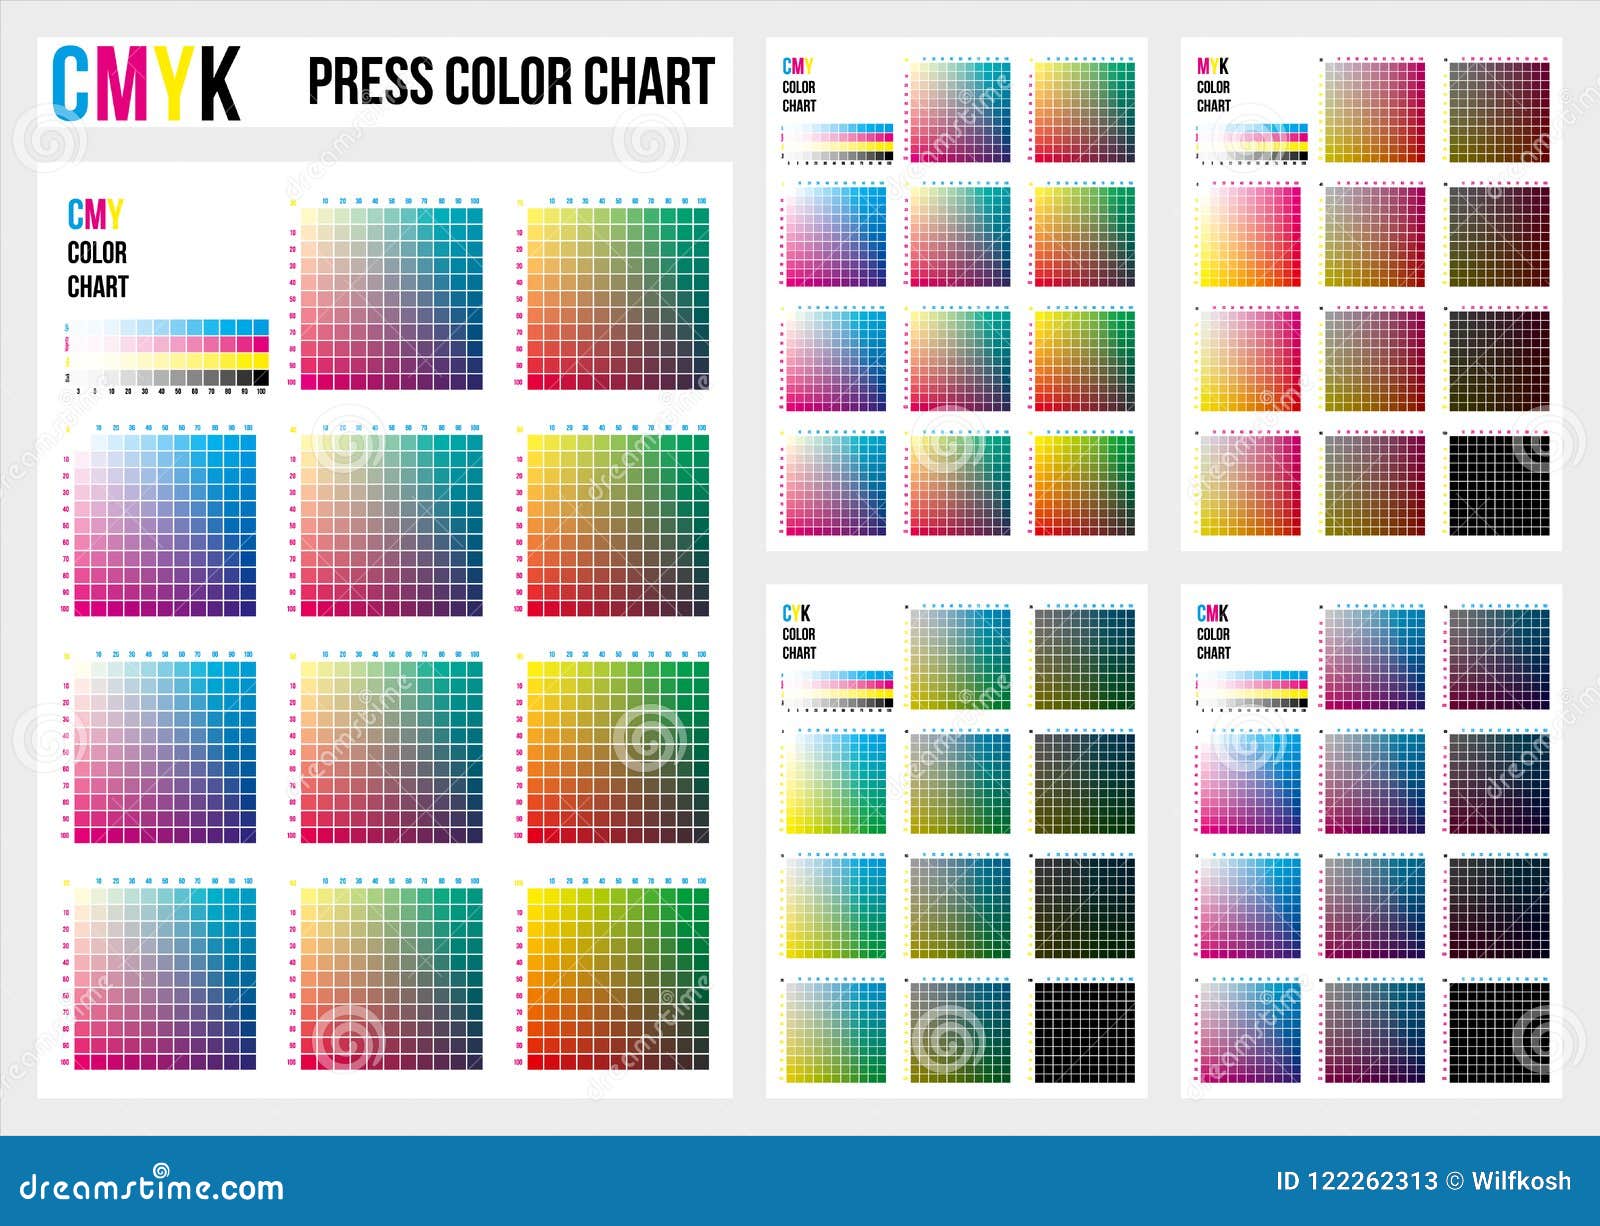 CMYK Press Color Chart. Vector Color Palette, CMYK Process Printing